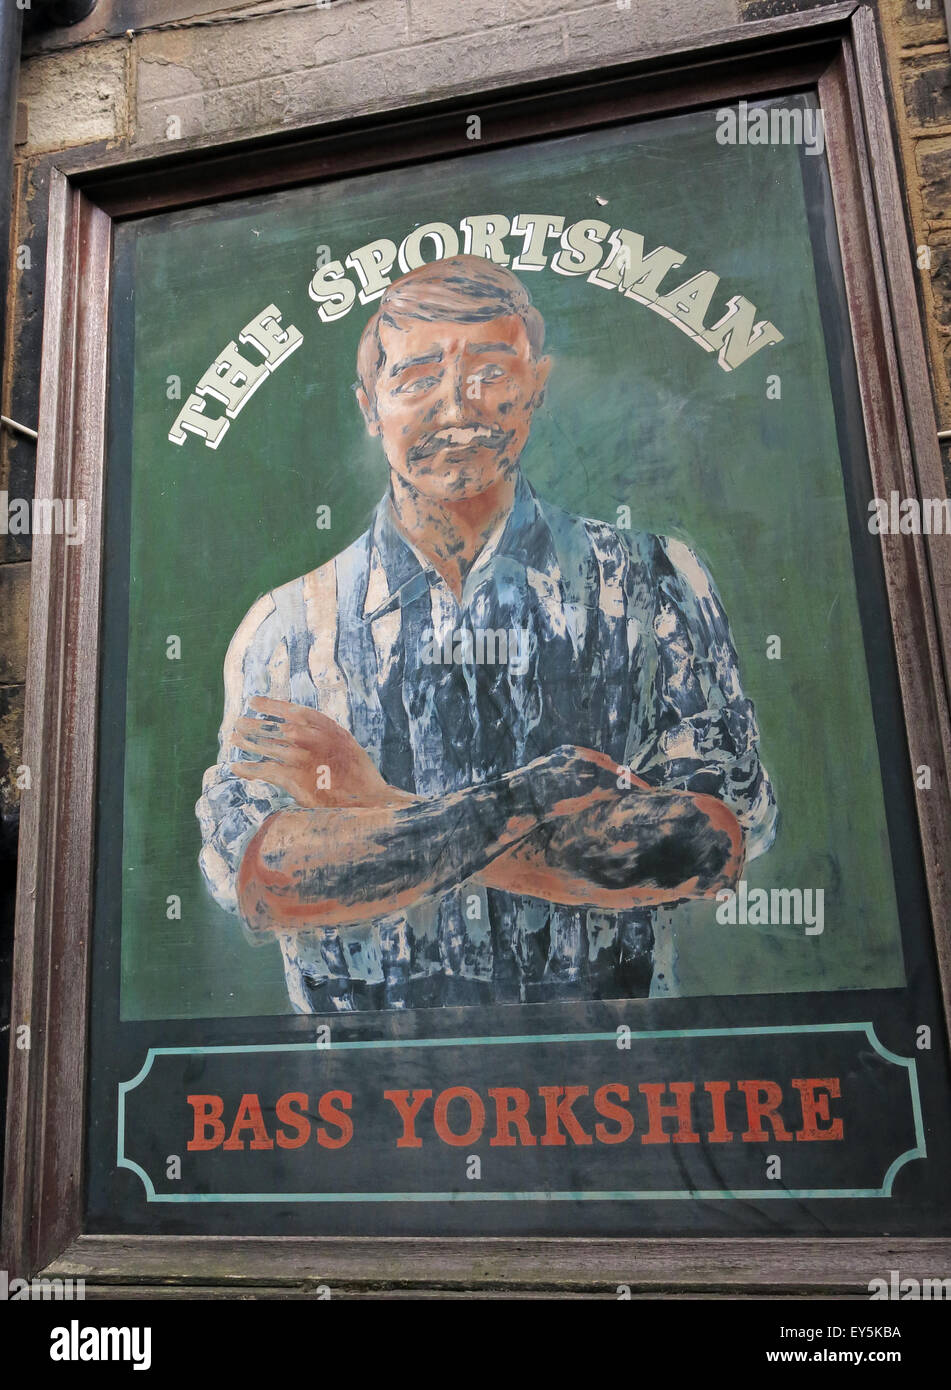 The Sportsman Pub sign, Bass Yorkshire, Huddersfield, West Riding, England, UK Stock Photo